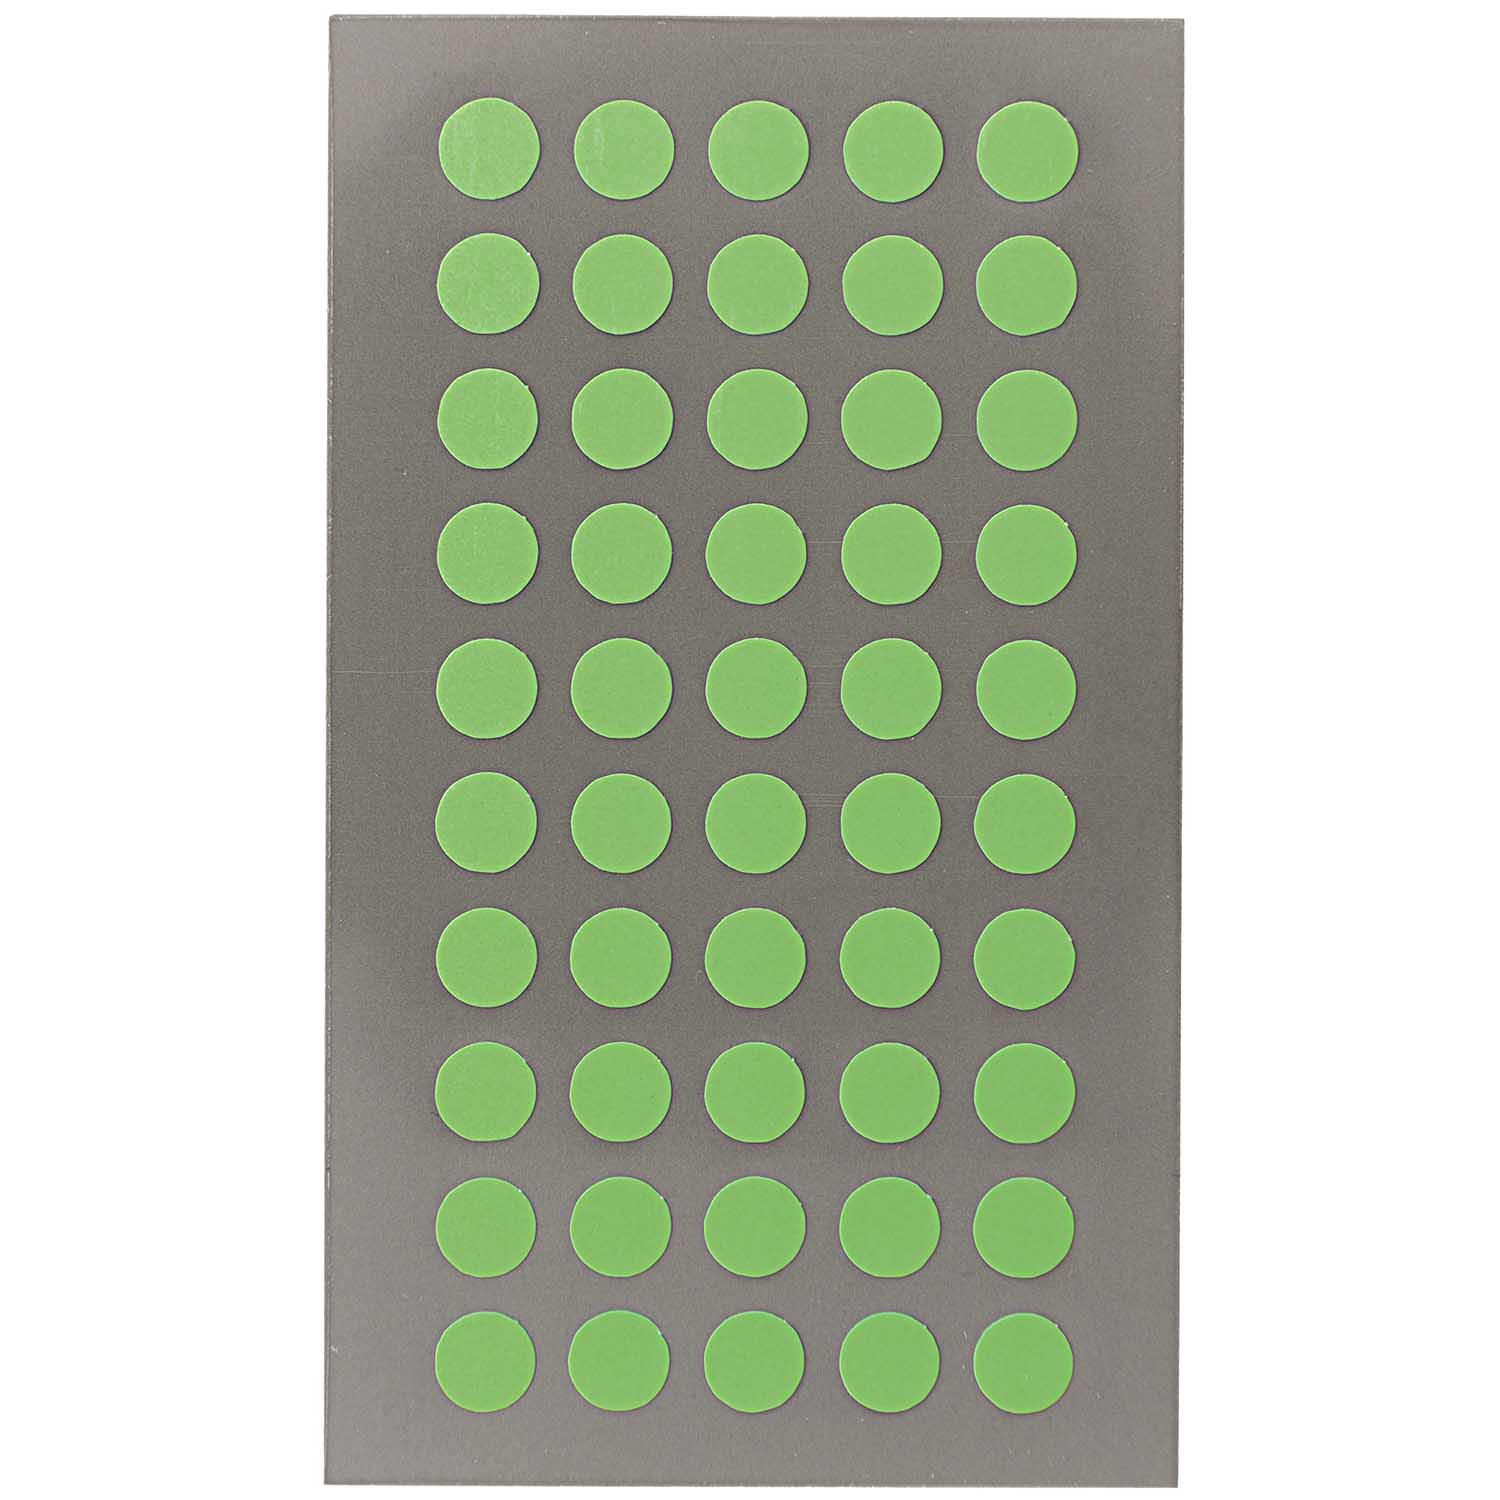 NEU Office Sticker, neon-grüne Punkte, 8 mm, 4 Blatt